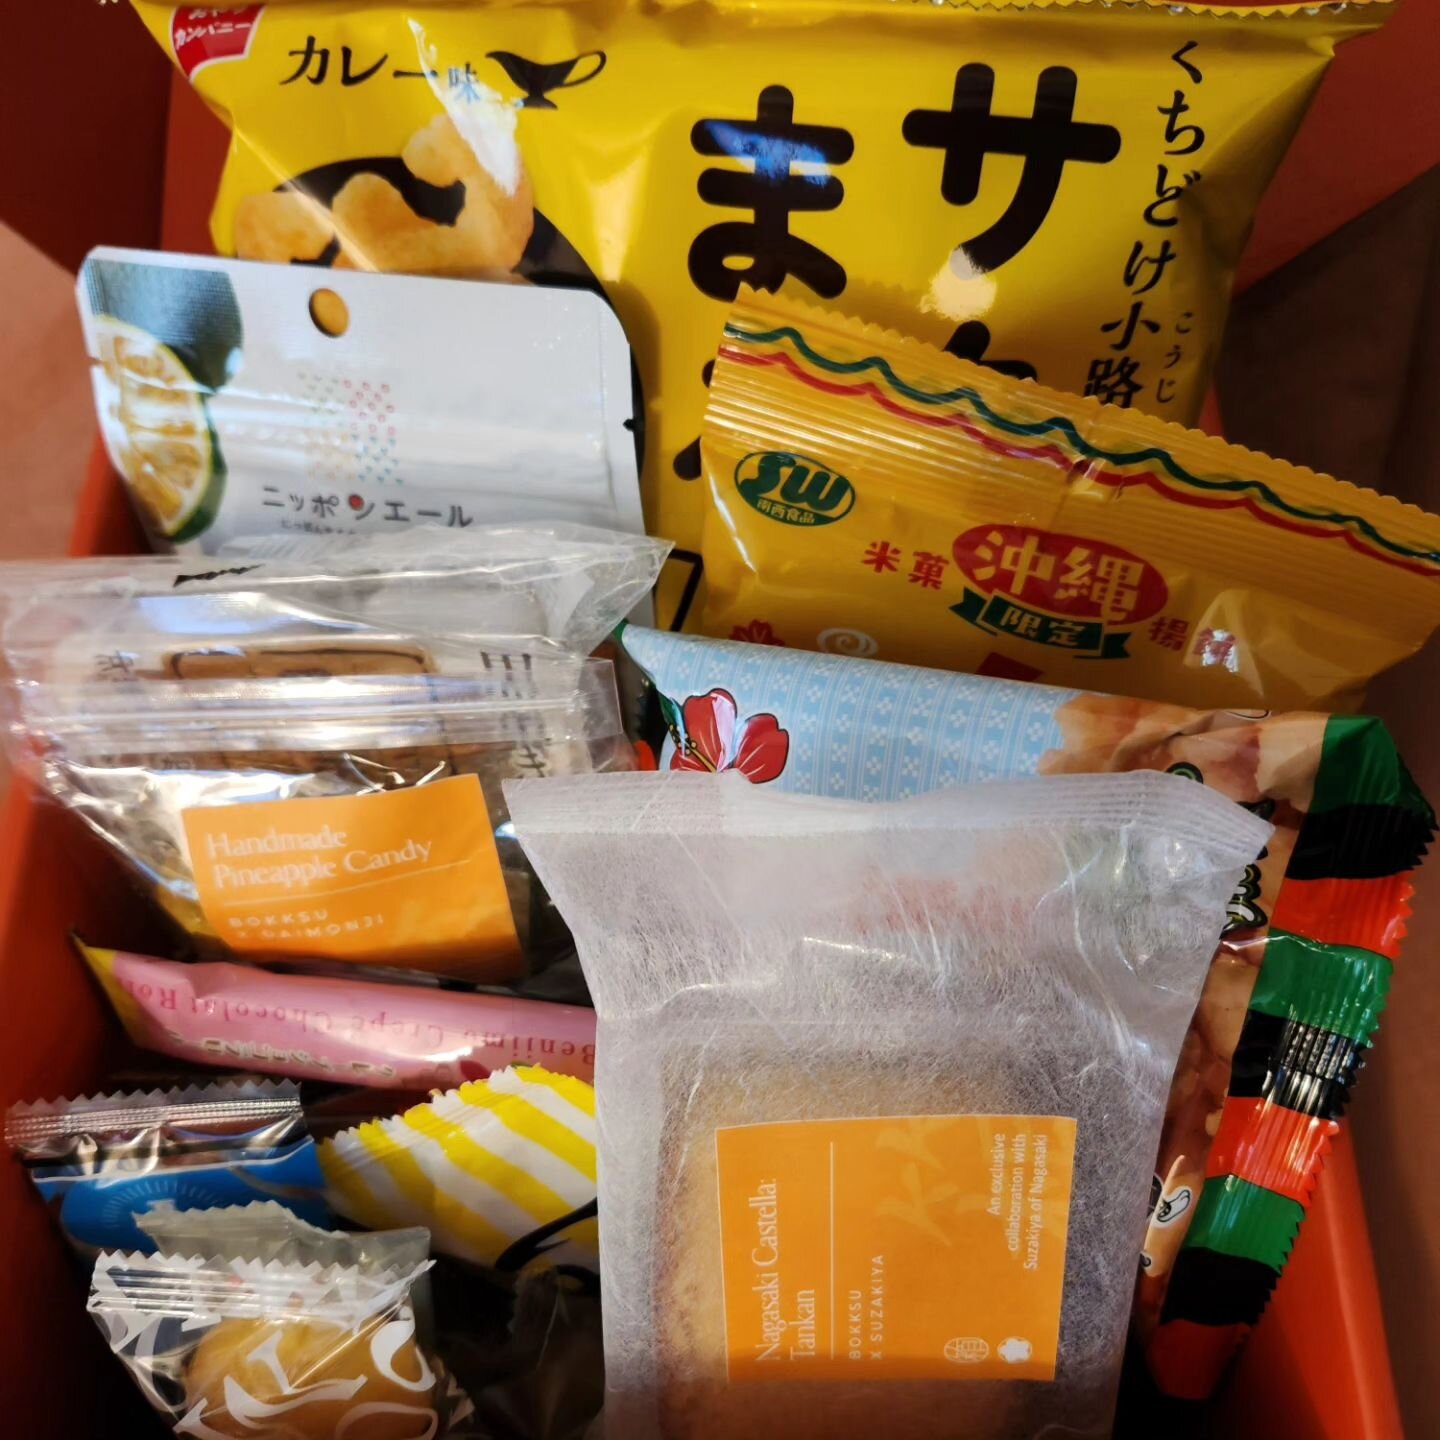 My latest Bokksu box arrived, and the theme is snacks from Sunny Okinawa!

#bokksu #snacks #japanese #japanesefood #japanesesnacks  #okinawa